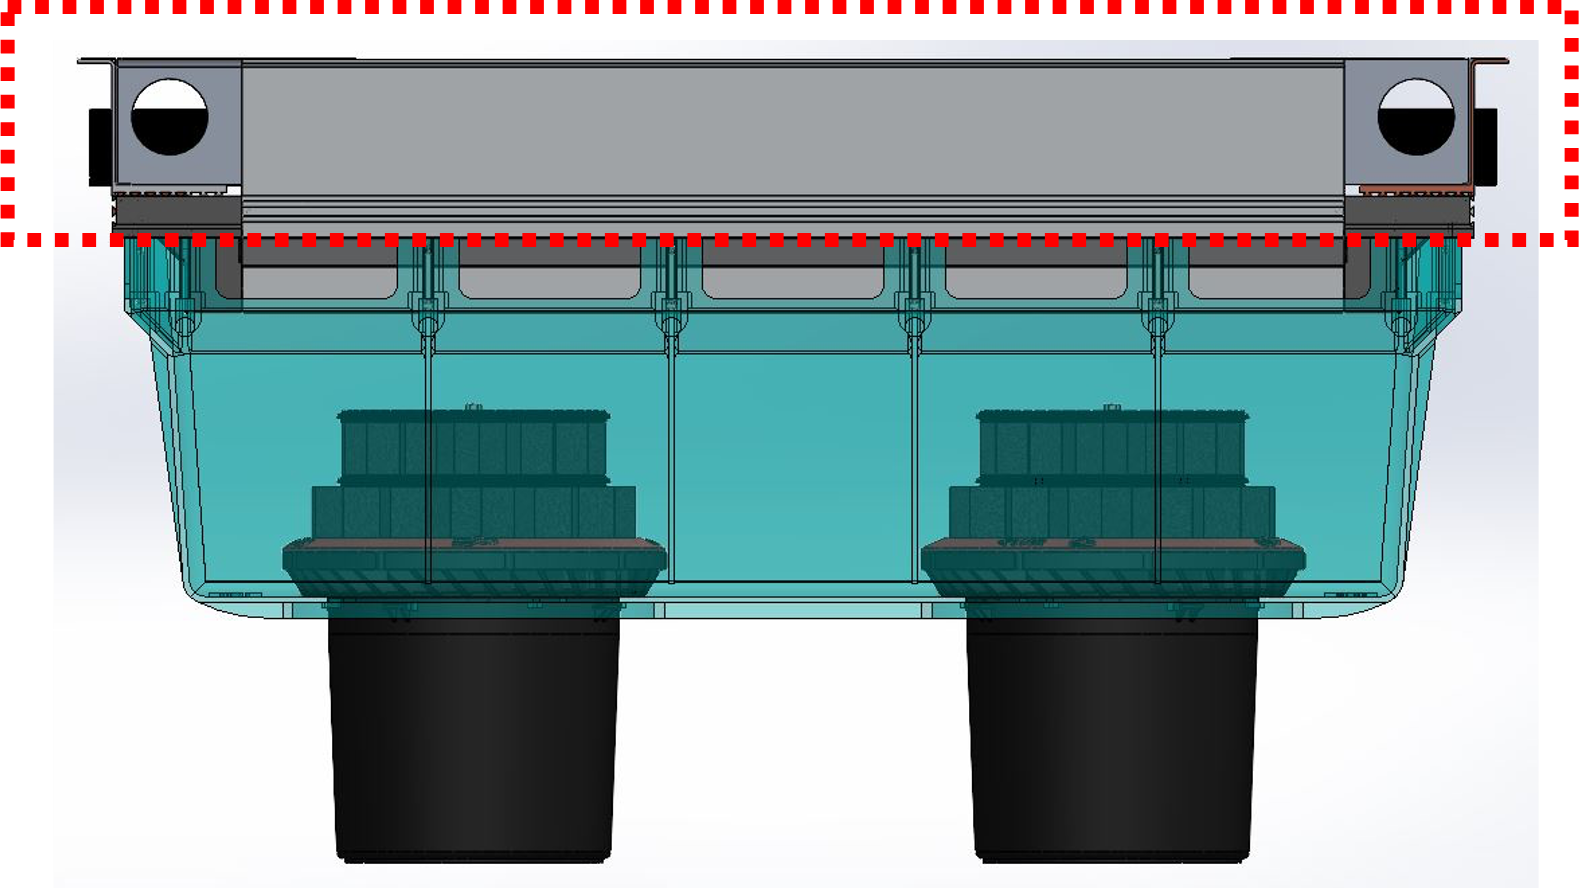 drop flange stormbasin cartridge based filter example